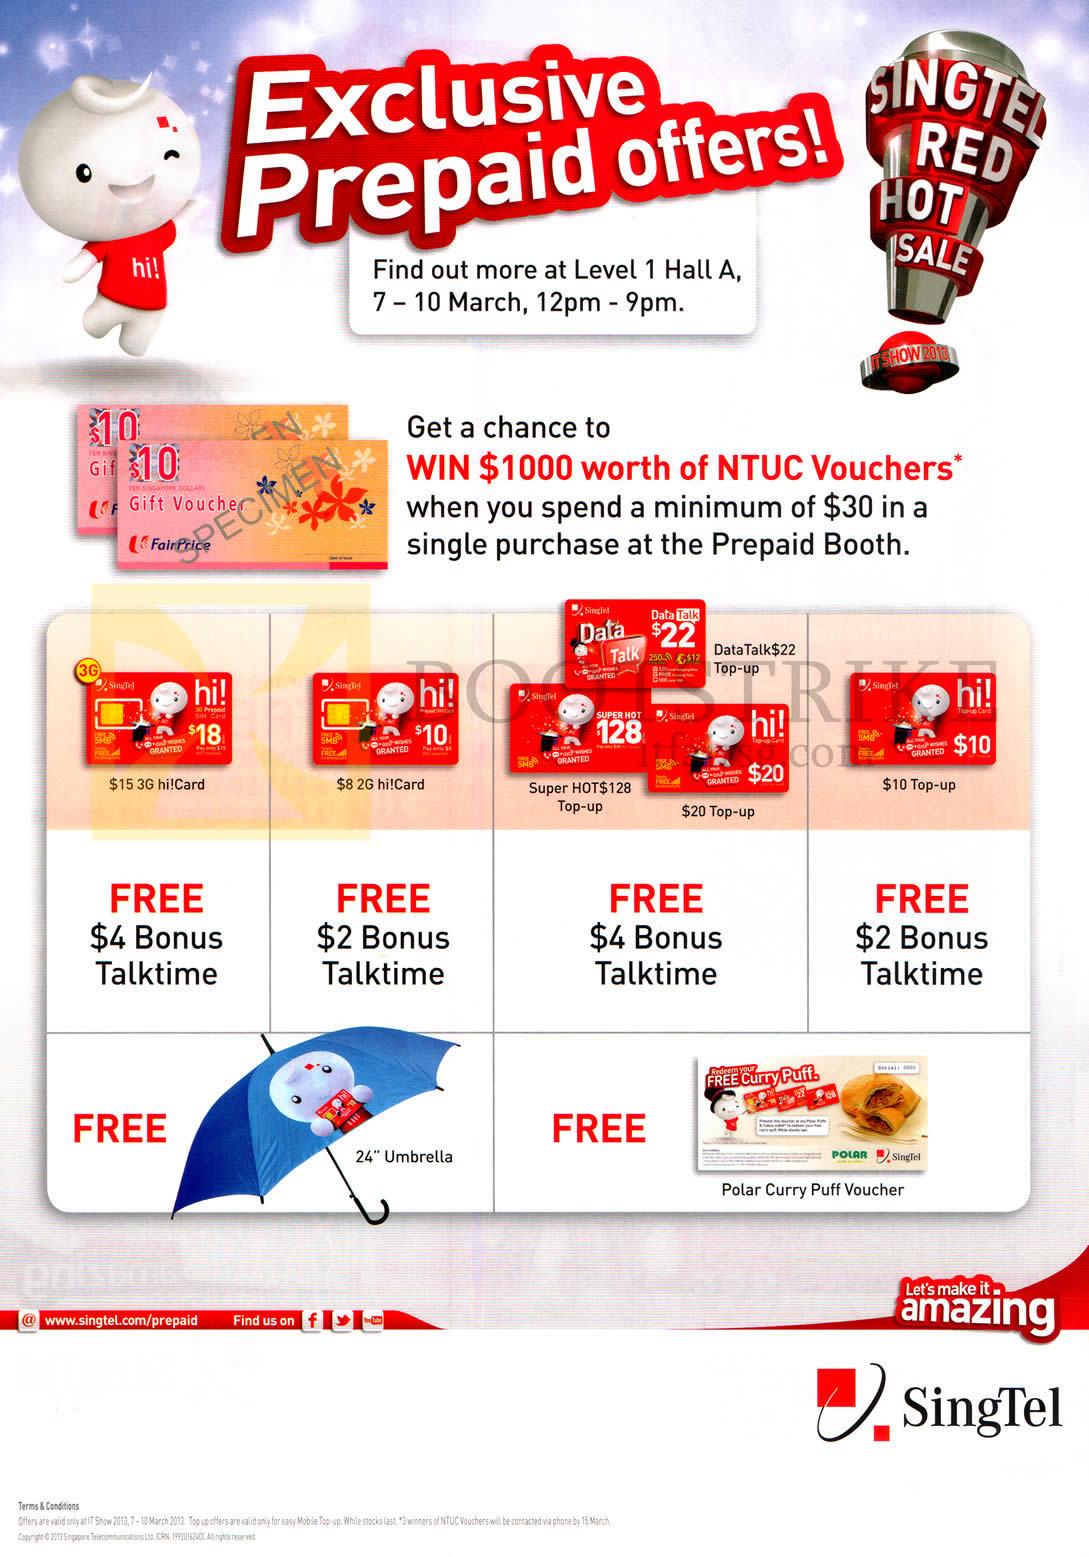 IT SHOW 2013 price list image brochure of Singtel Mobile Prepaid Hi Card, Top Up Cards Free Bonus Talktime, Free Vouchers